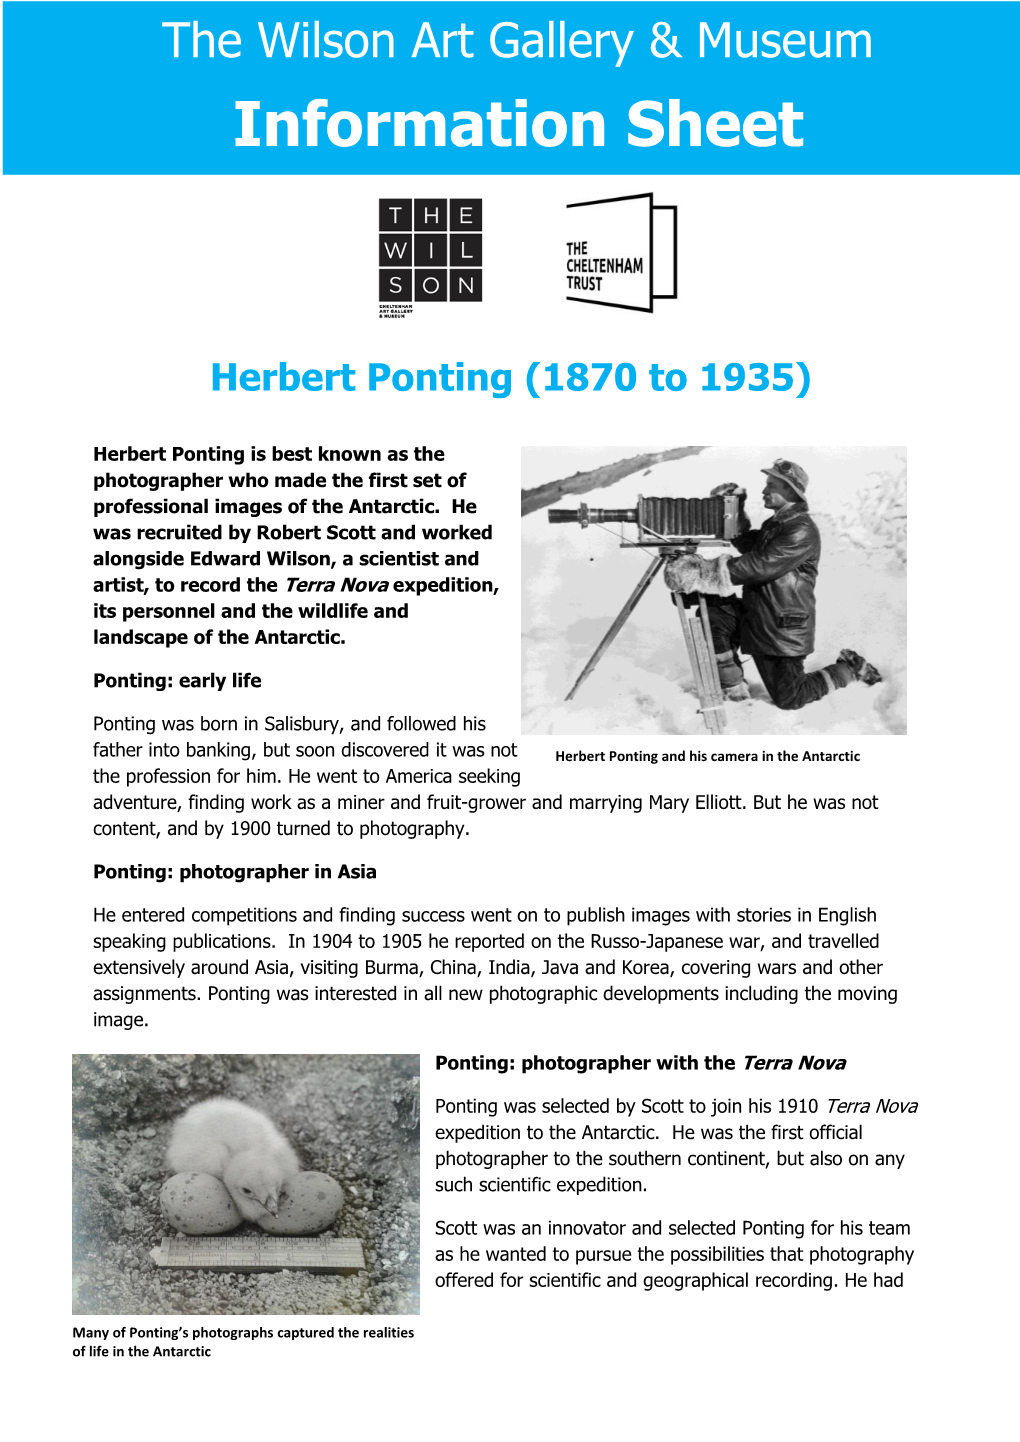 Download the Herbert Ponting Information Sheet